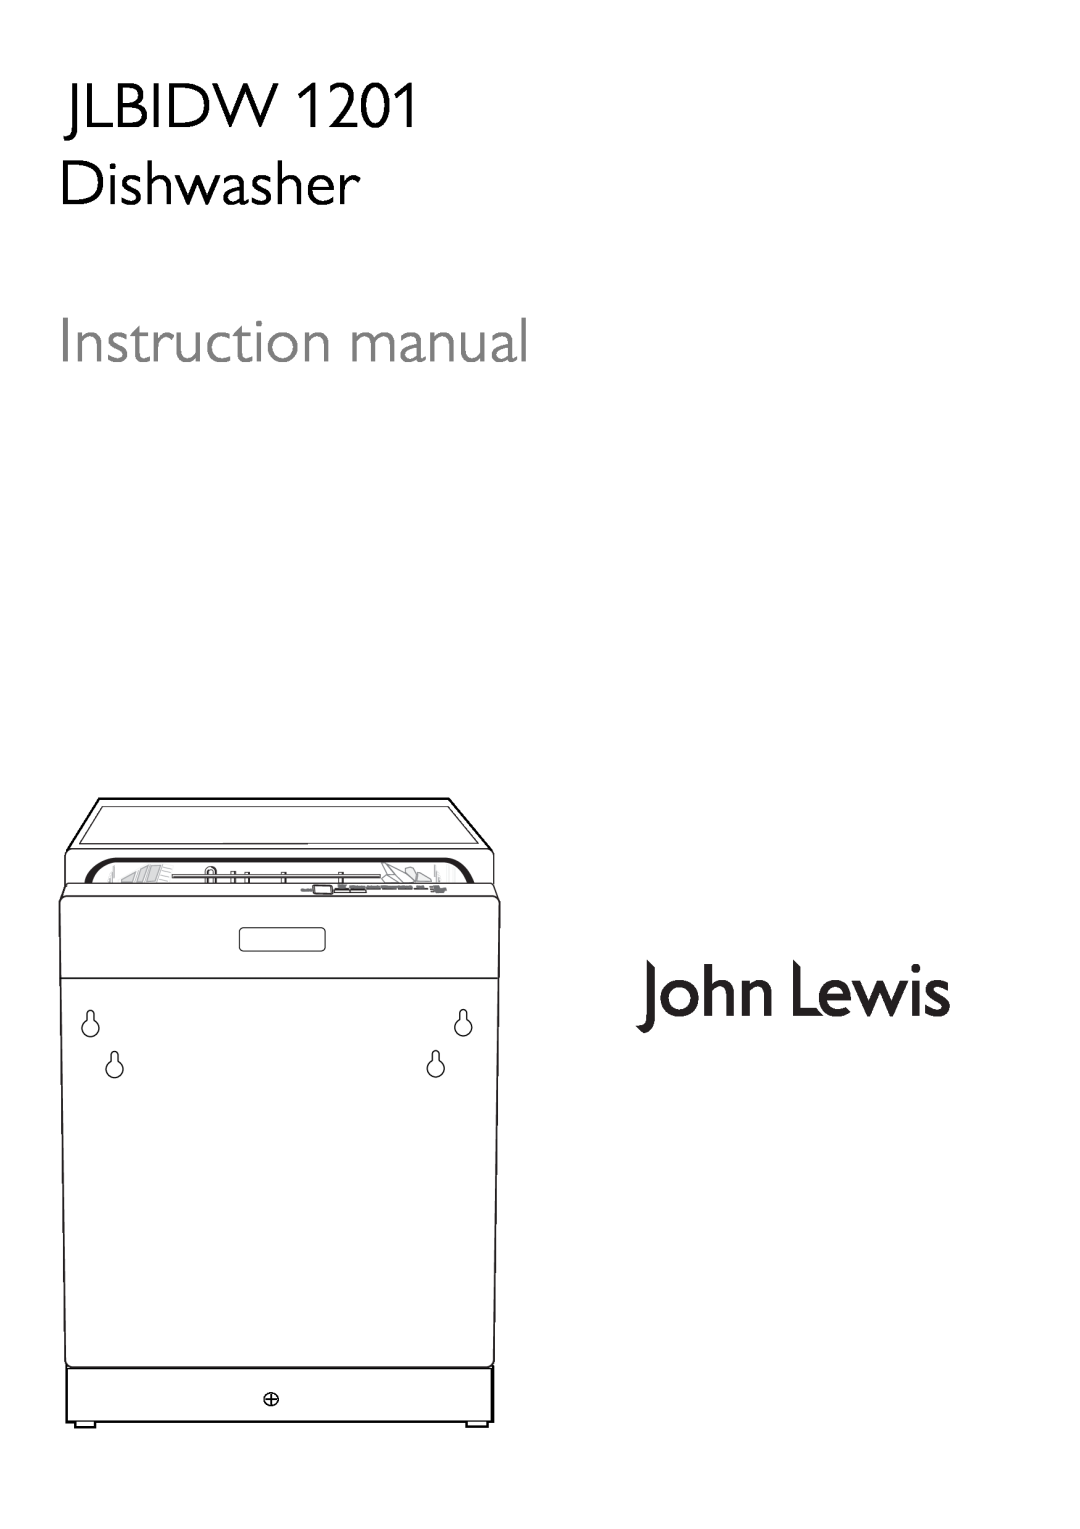 John Lewis instruction manual Instruction manual, JLBIDW 1201 Dishwasher 